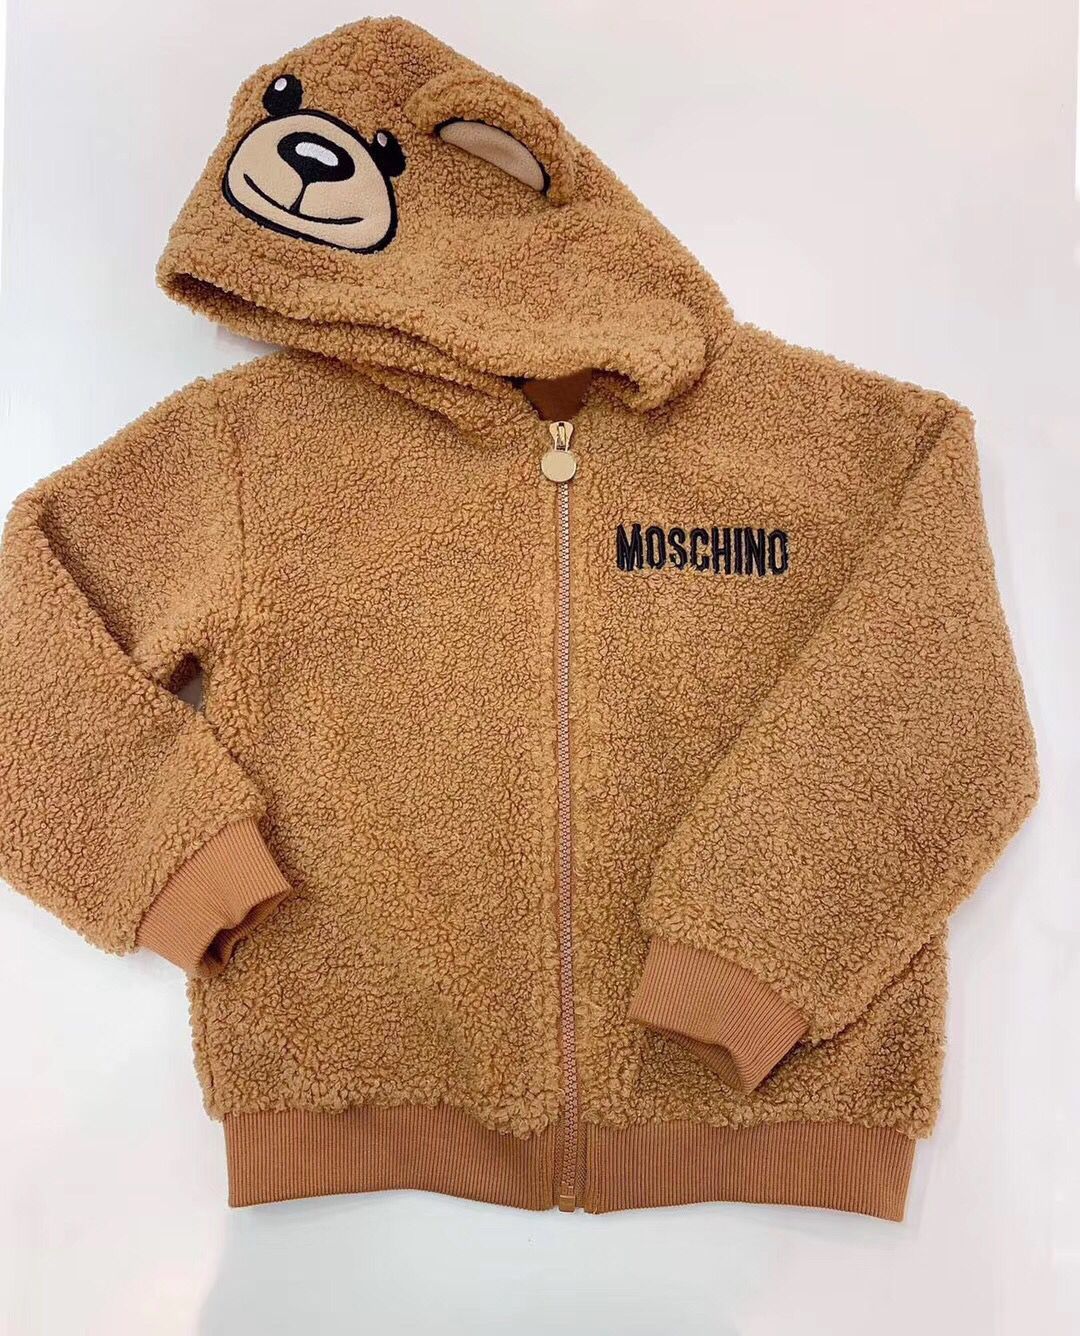 hooded teddy bear jacket